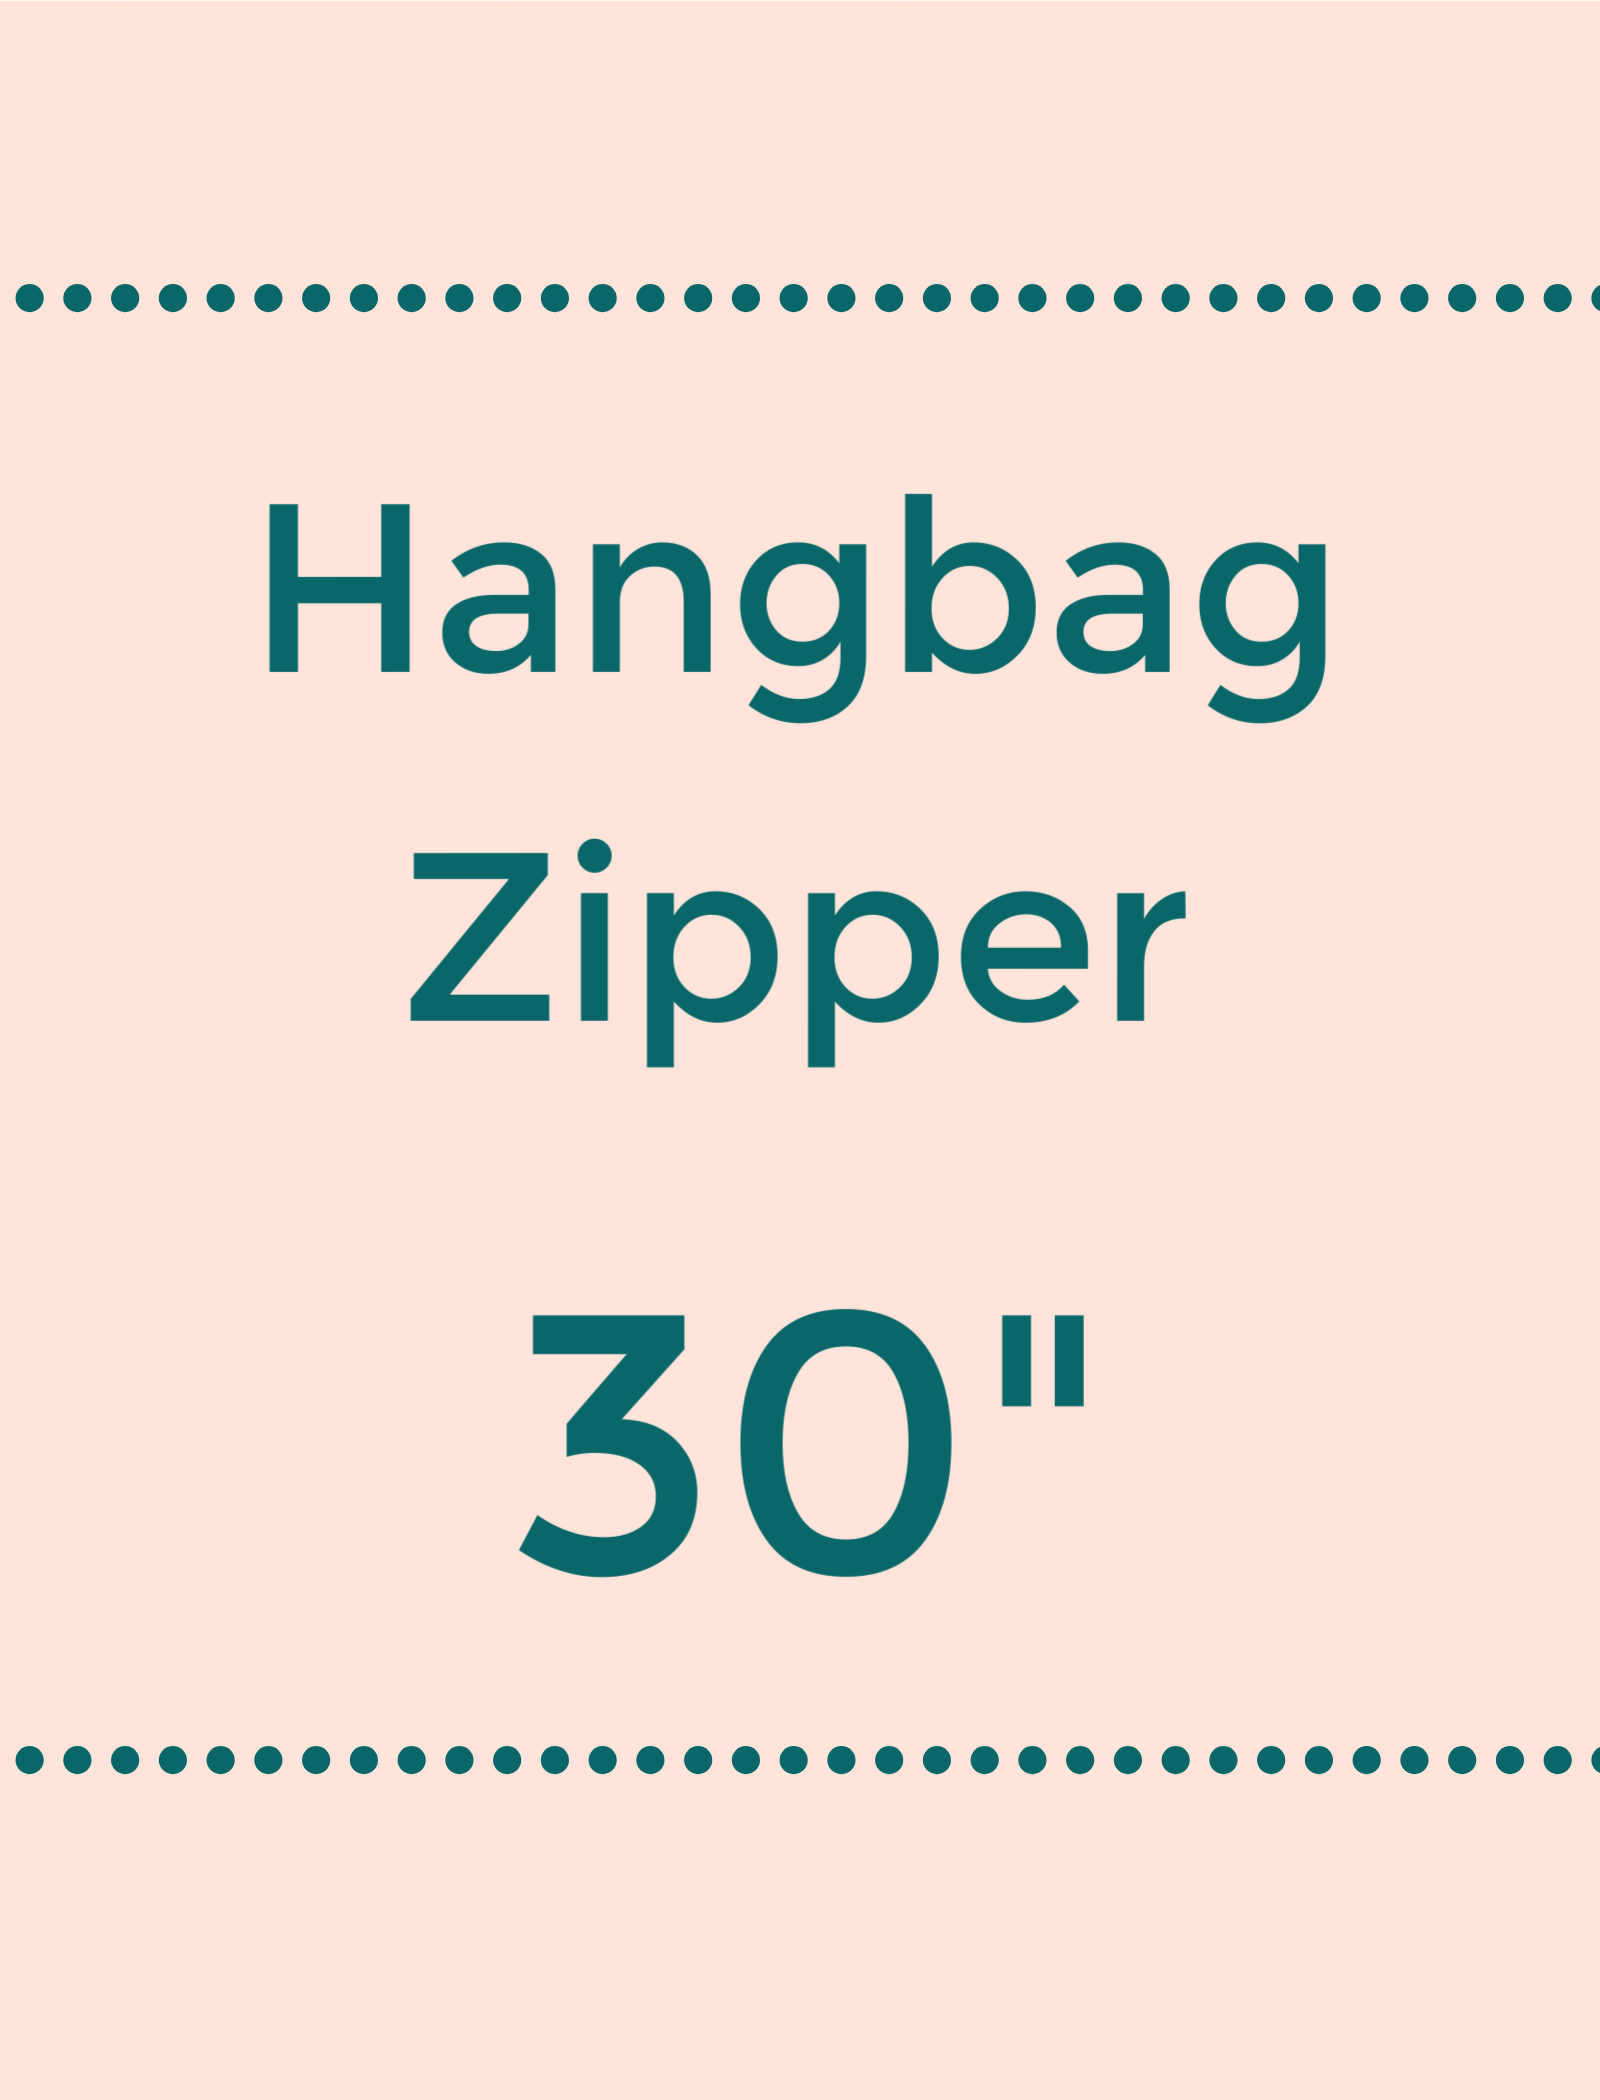 Zinc Die Casting Purse And Handbag Accessories Manufacturer & Supplier |  92062 | How to make handbags, Purses and handbags, Making supplies